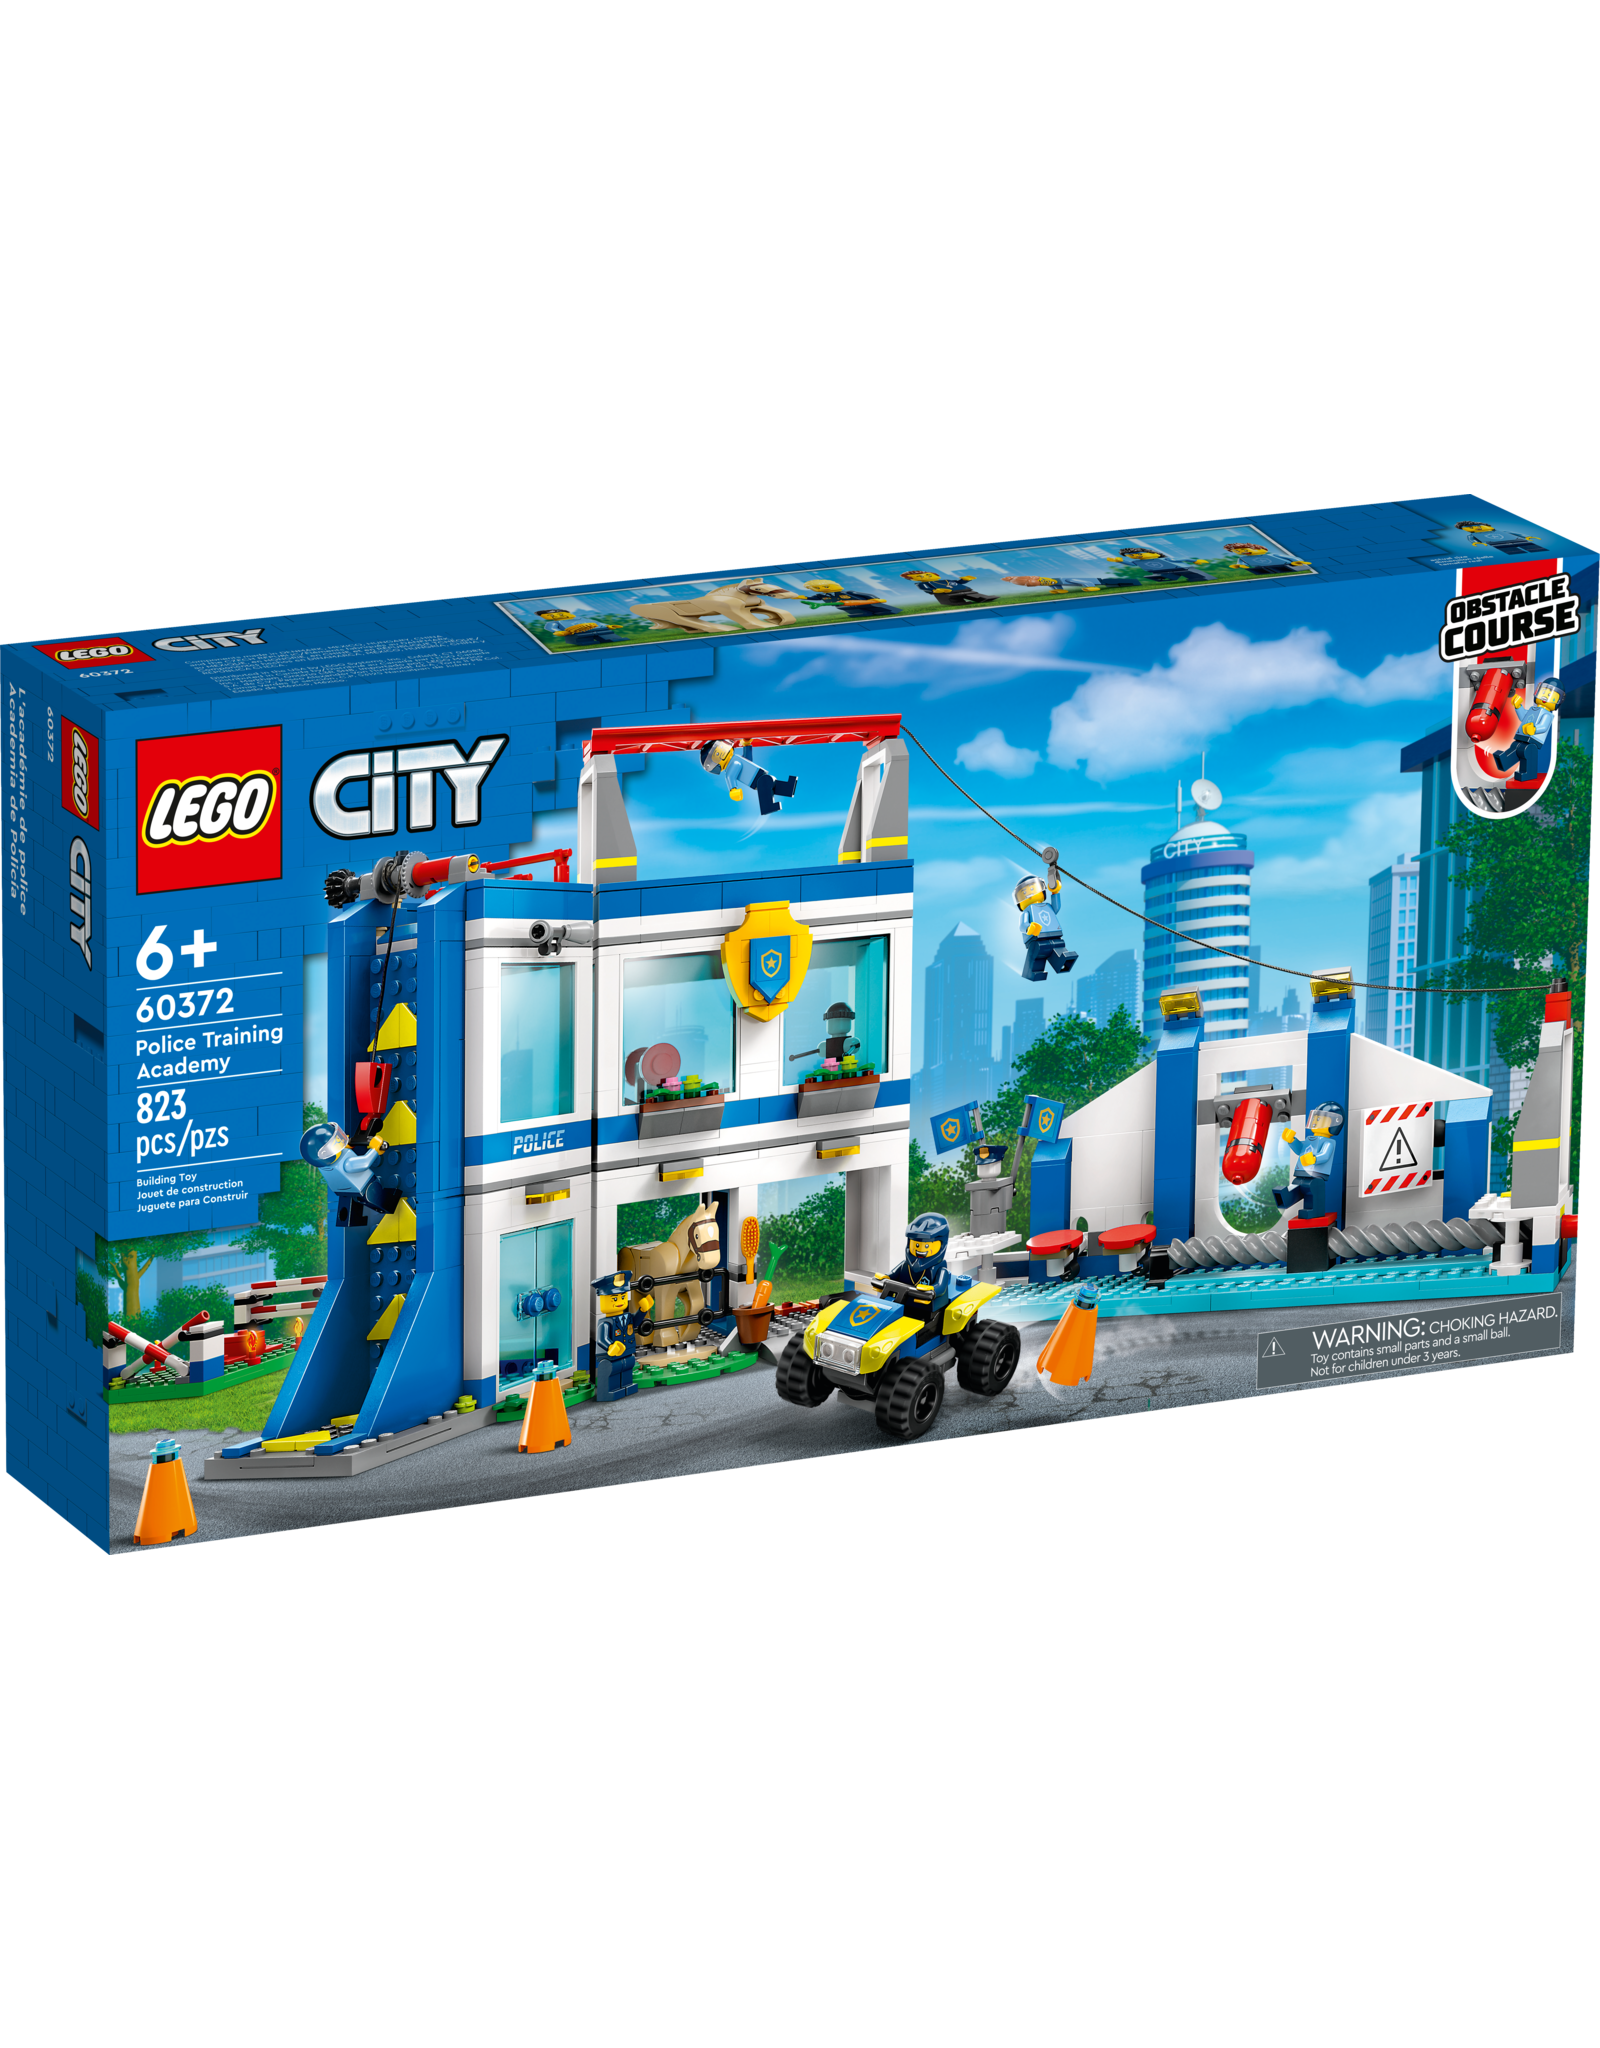 LEGO City Police 60372 Police Training Academy